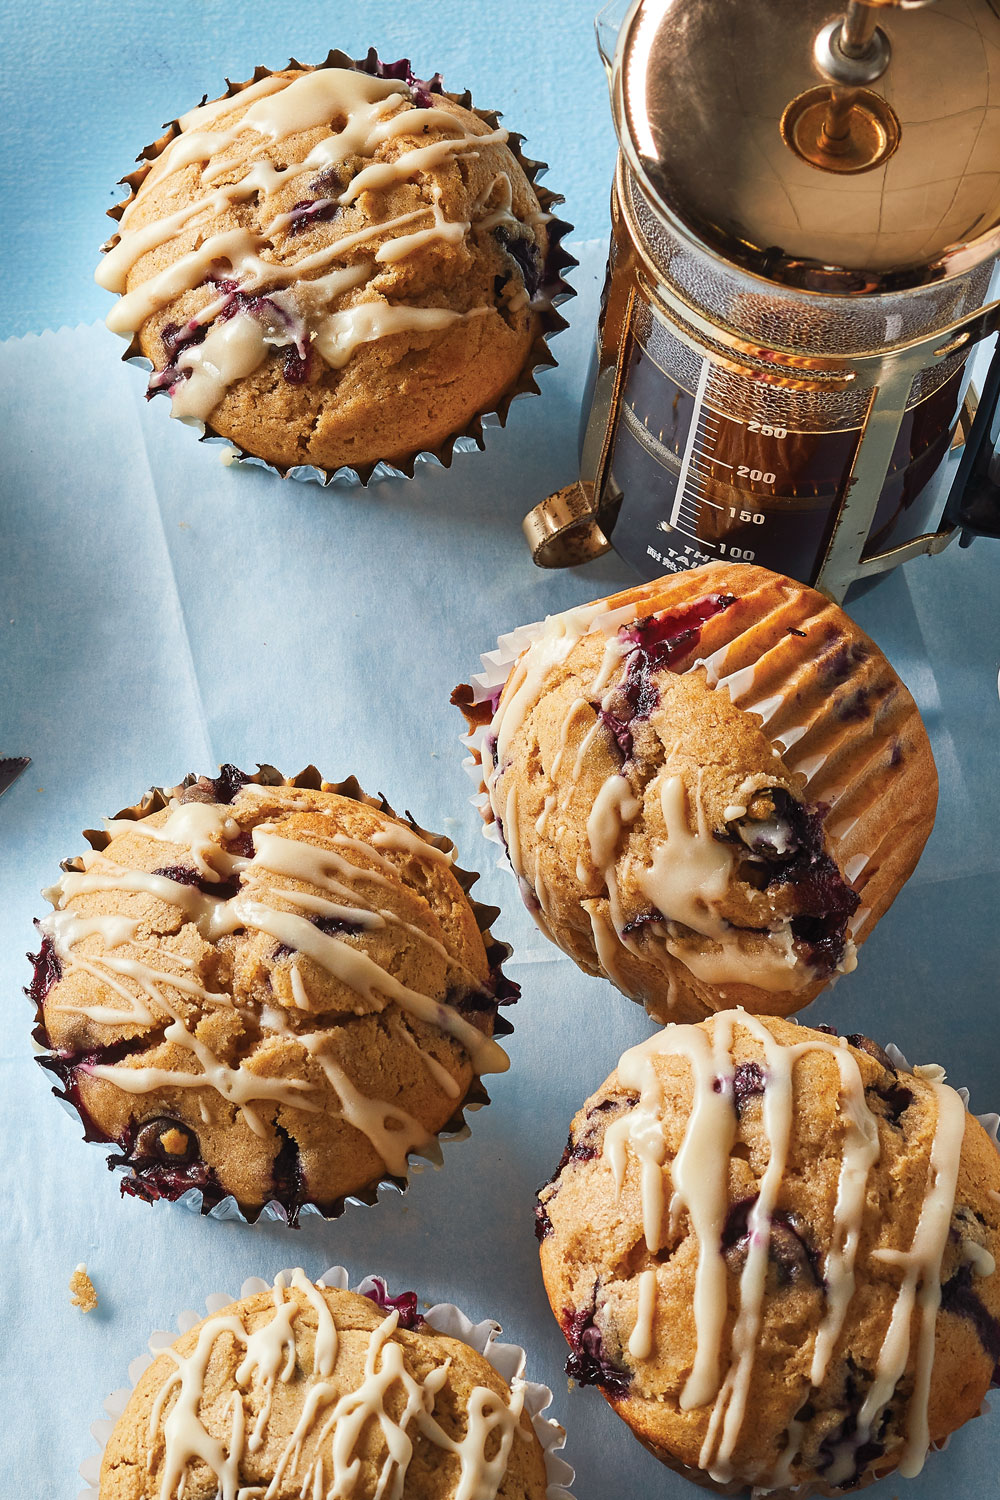 Coffee Cake Muffins Recipe - Dessert for Two